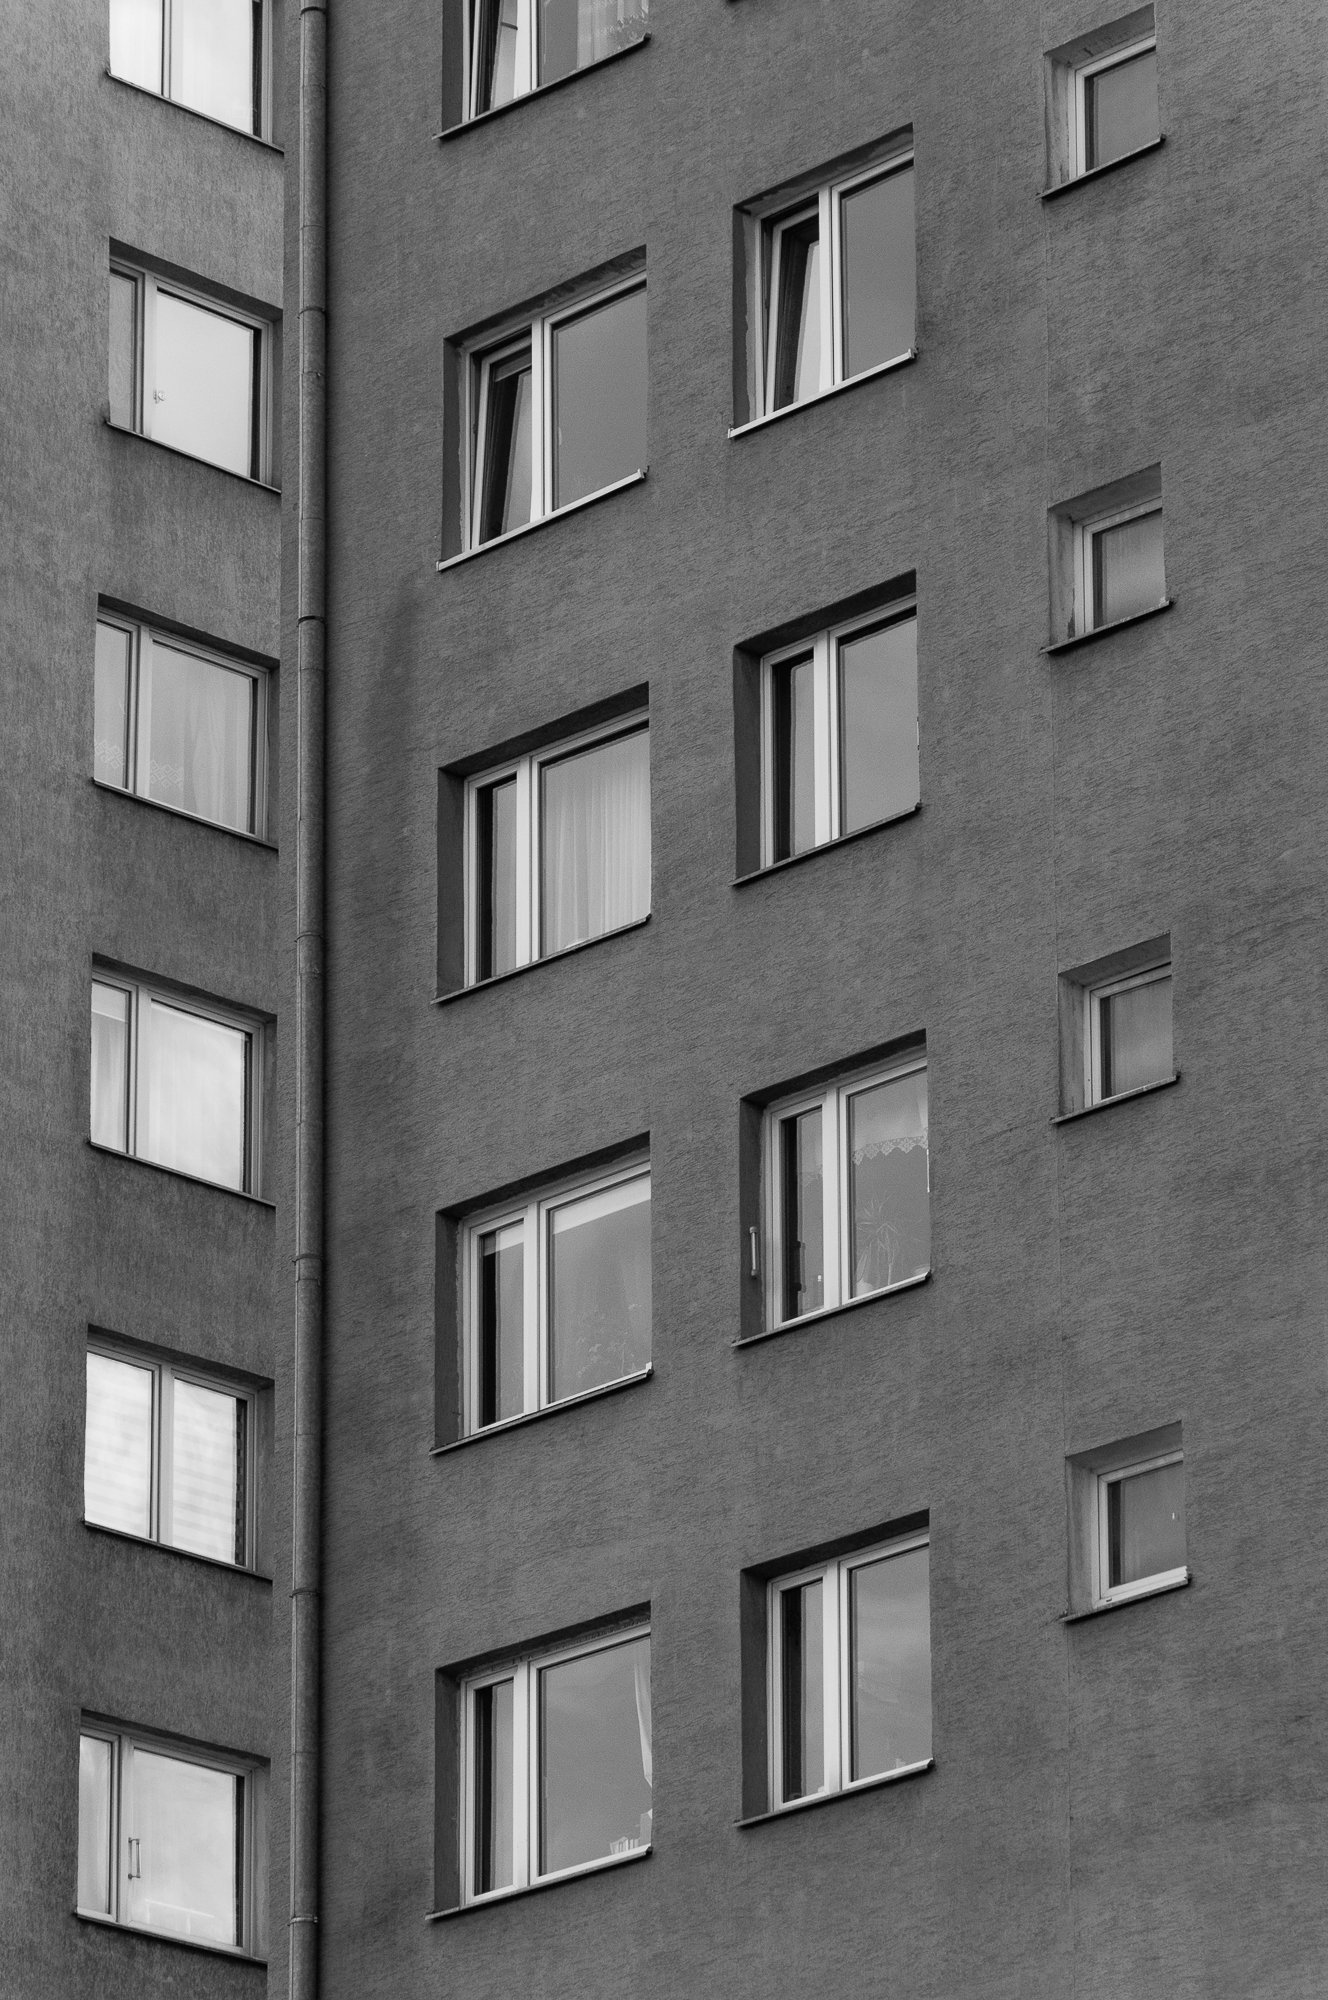 Adam Mazek Photography Warsaw 2017. Minimalism. Perspective. Blocks of flats.